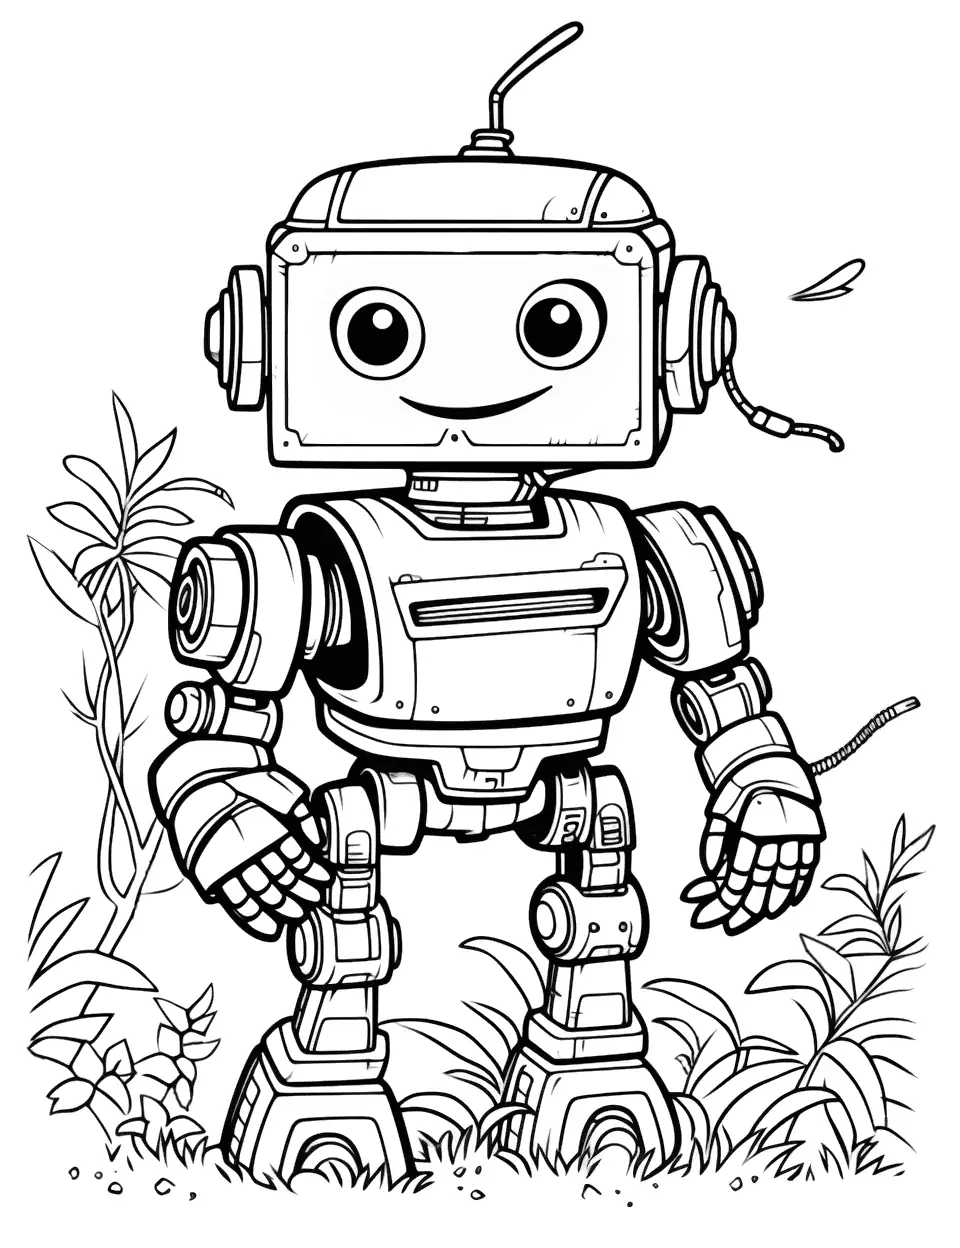 Jungle Explorer Robot Coloring Page - A robot exploring a lush jungle.